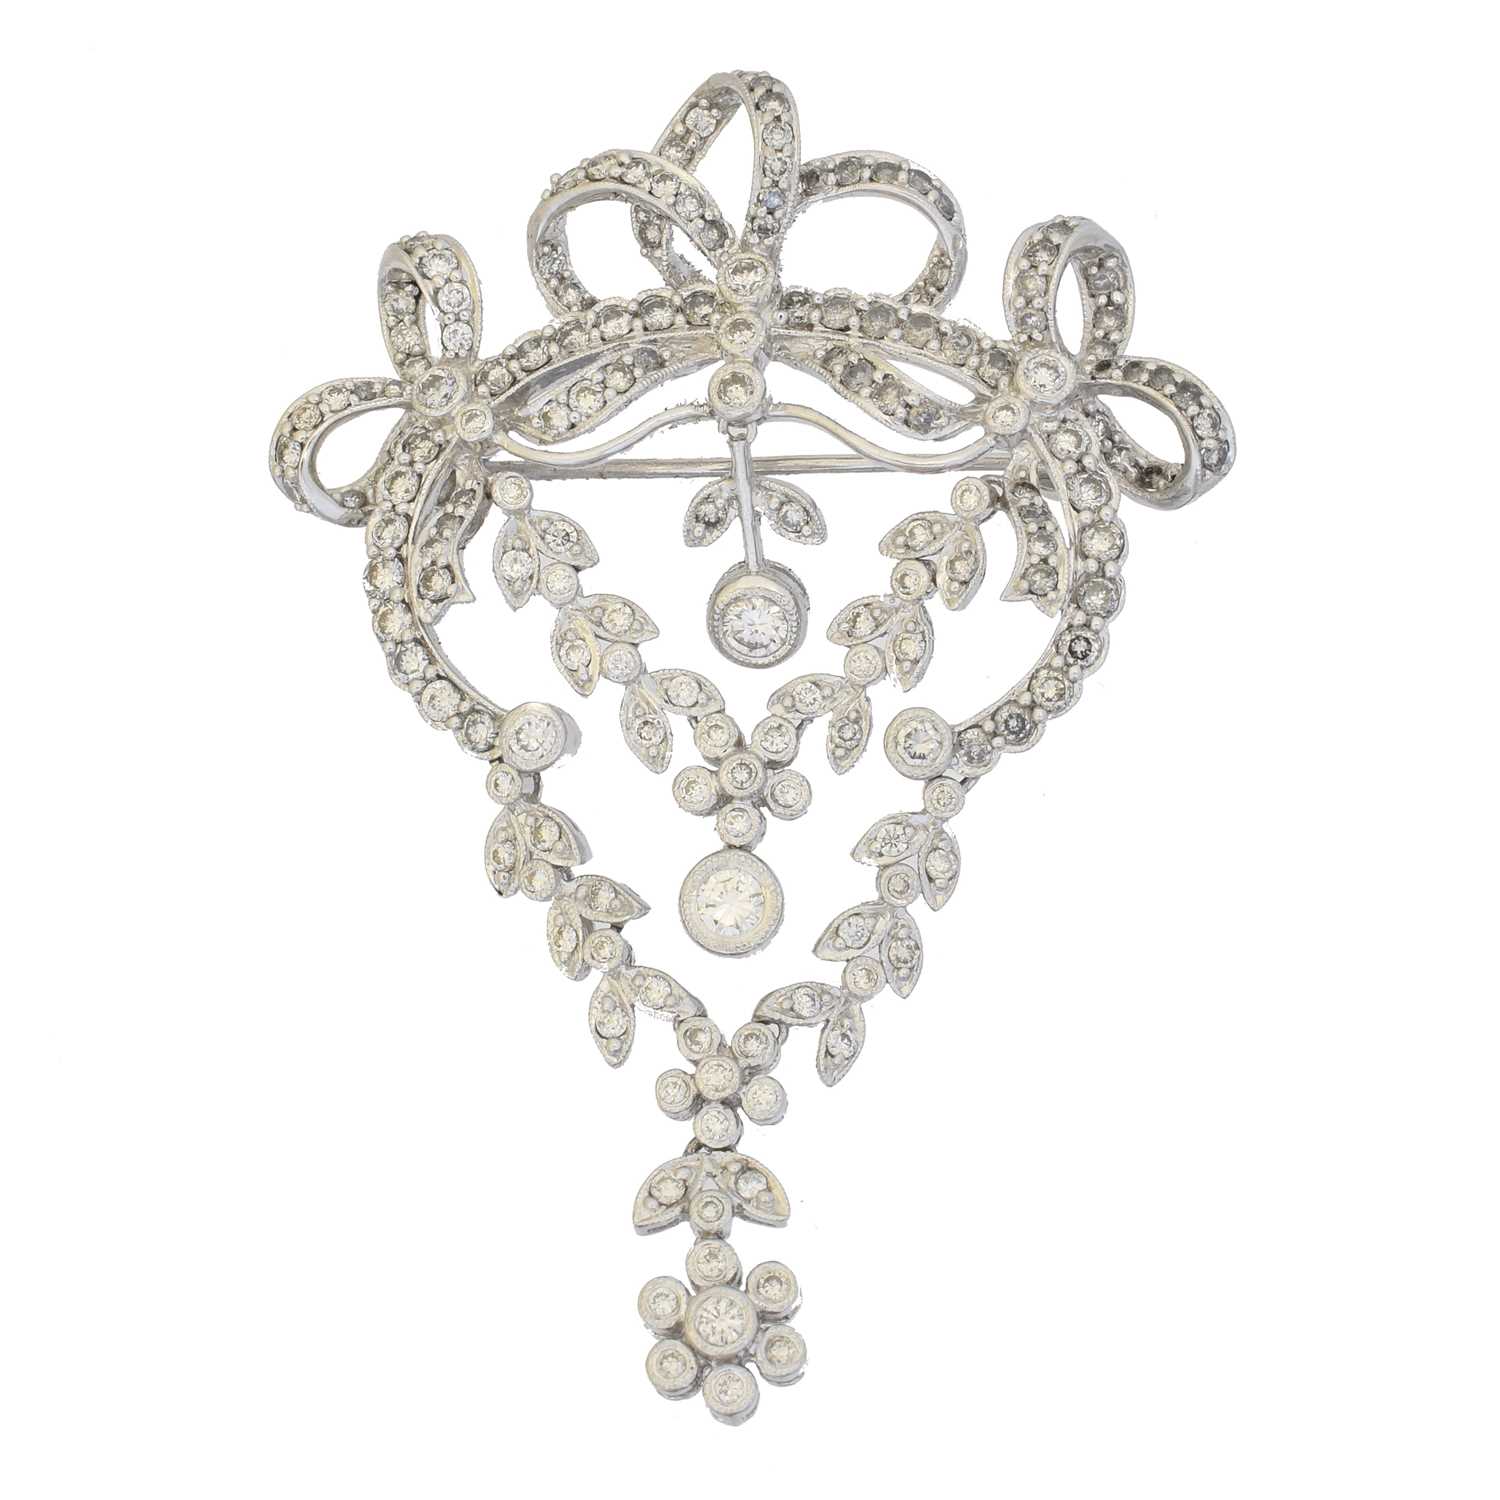 Lot 8 - A Belle Epoque style diamond brooch